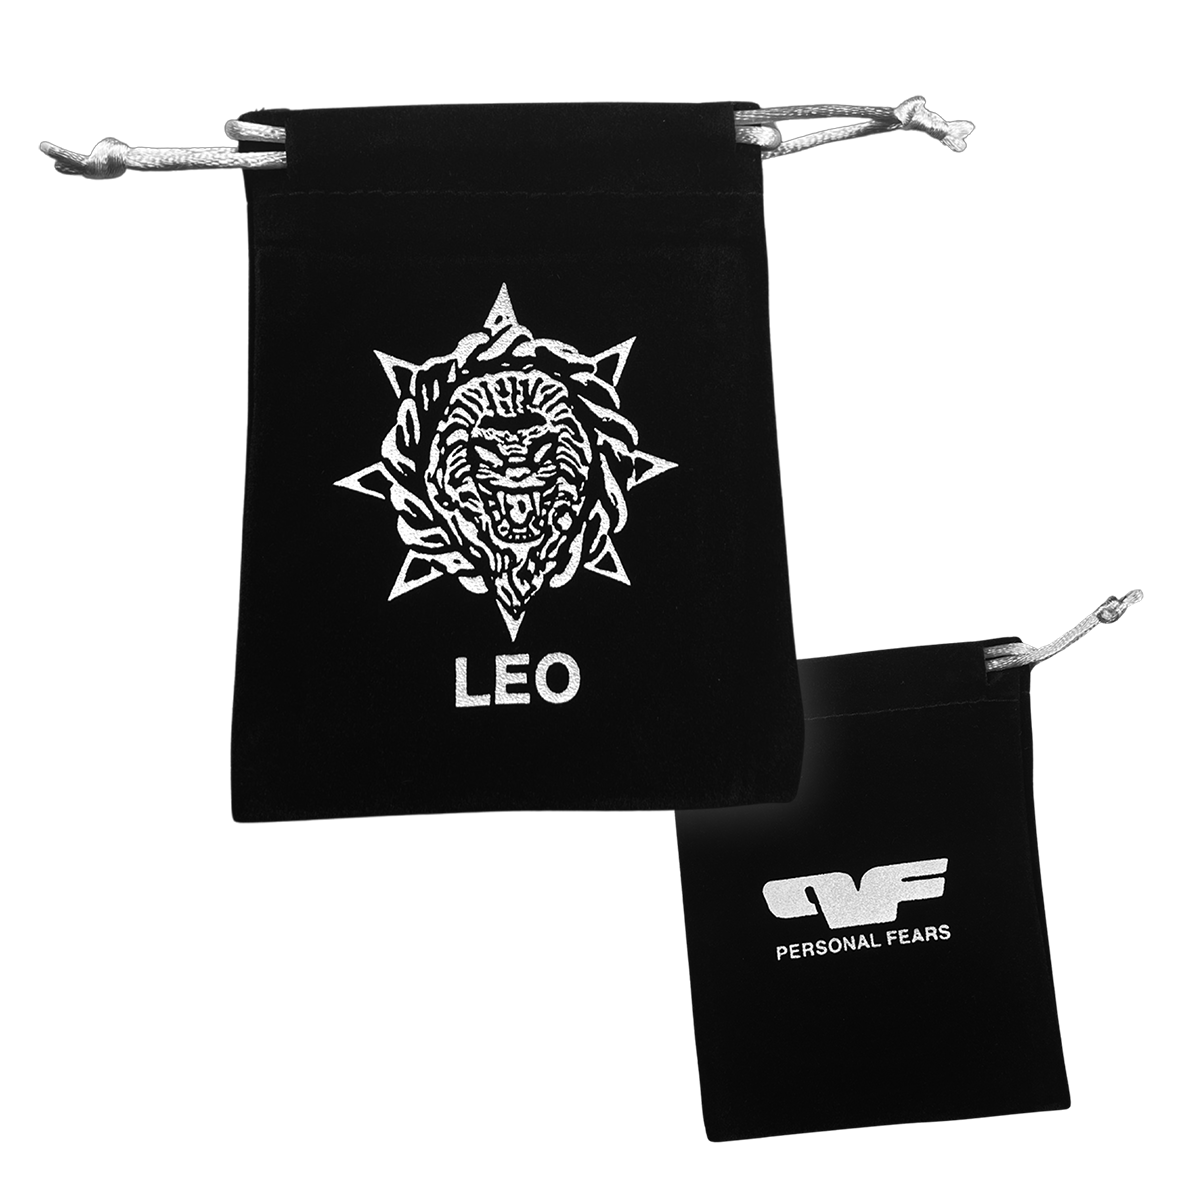  Leo Necklace Pendant - Bag - Personal Fears